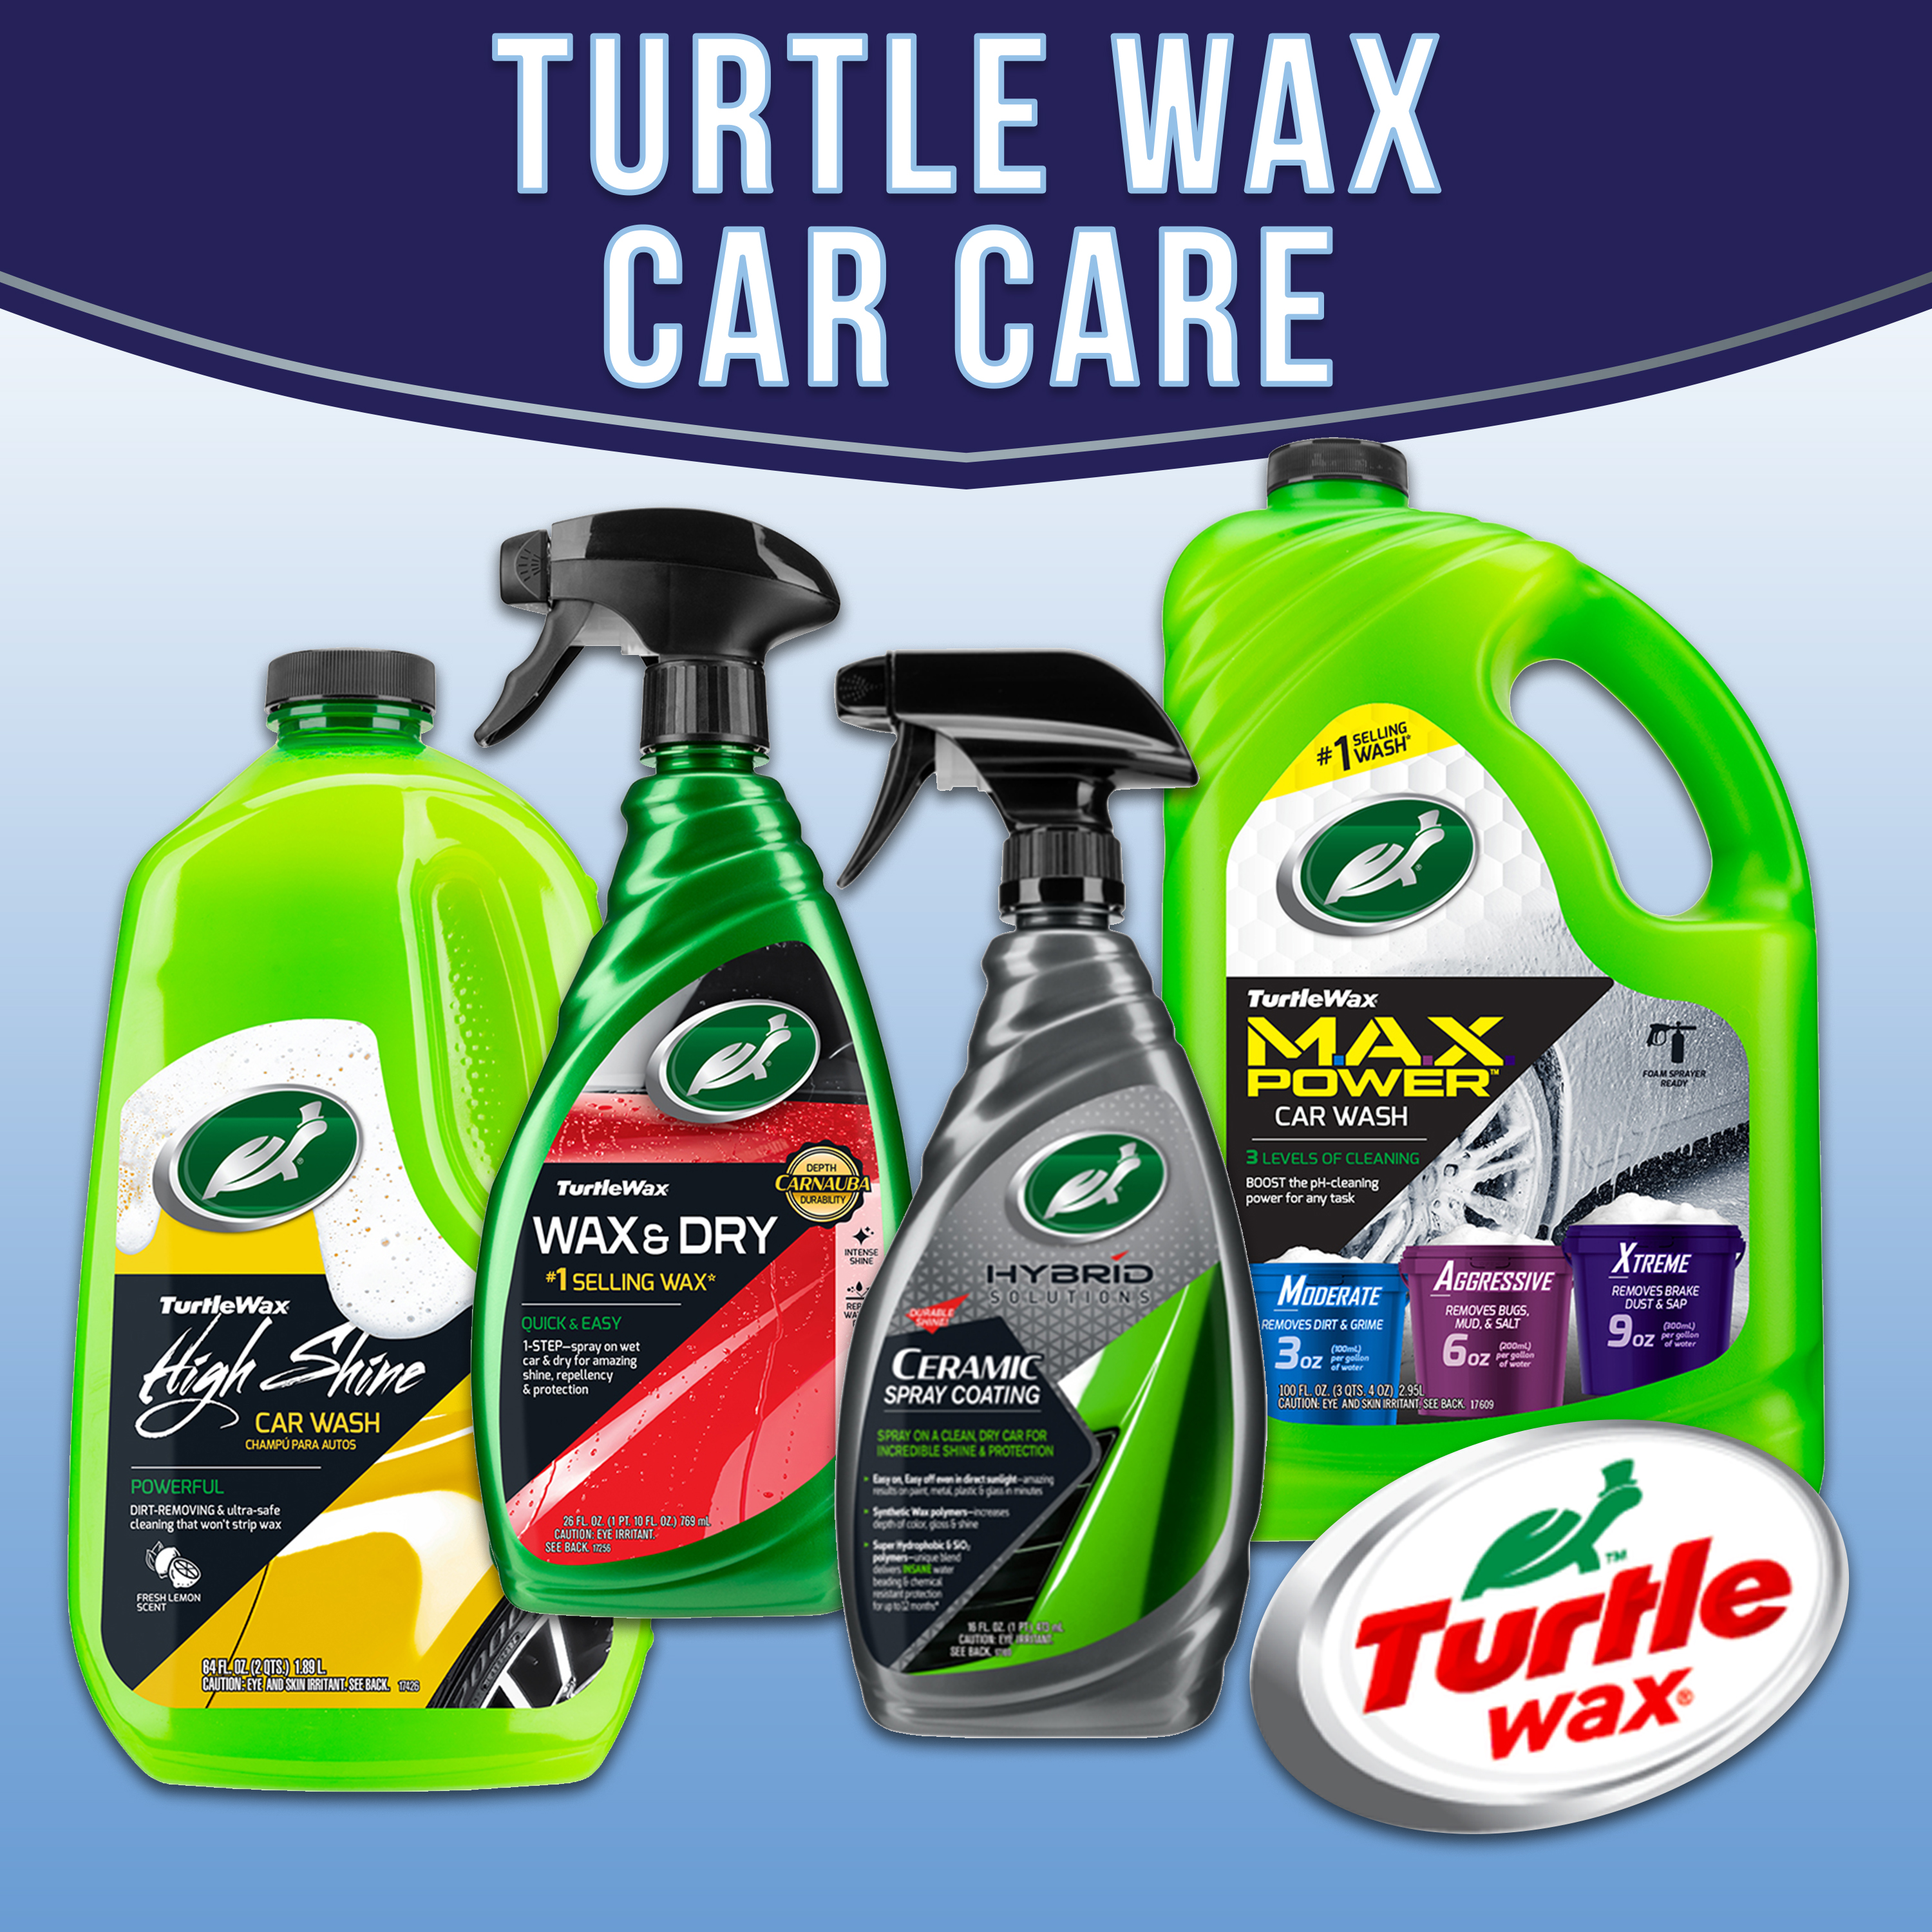 Turtle Wax Car Care